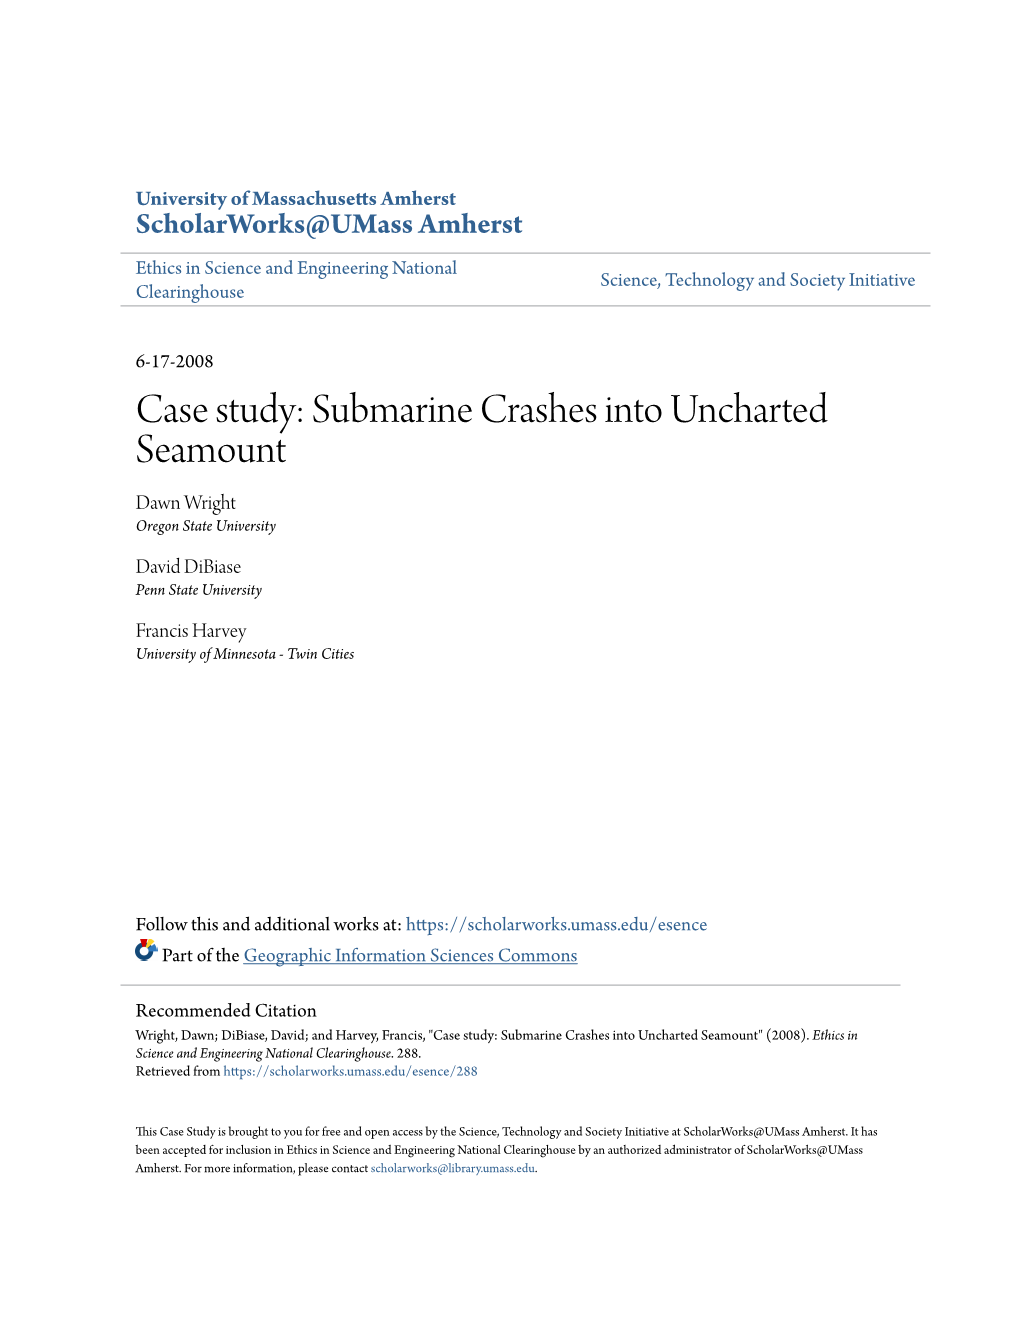 Case Study: Submarine Crashes Into Uncharted Seamount Dawn Wright Oregon State University